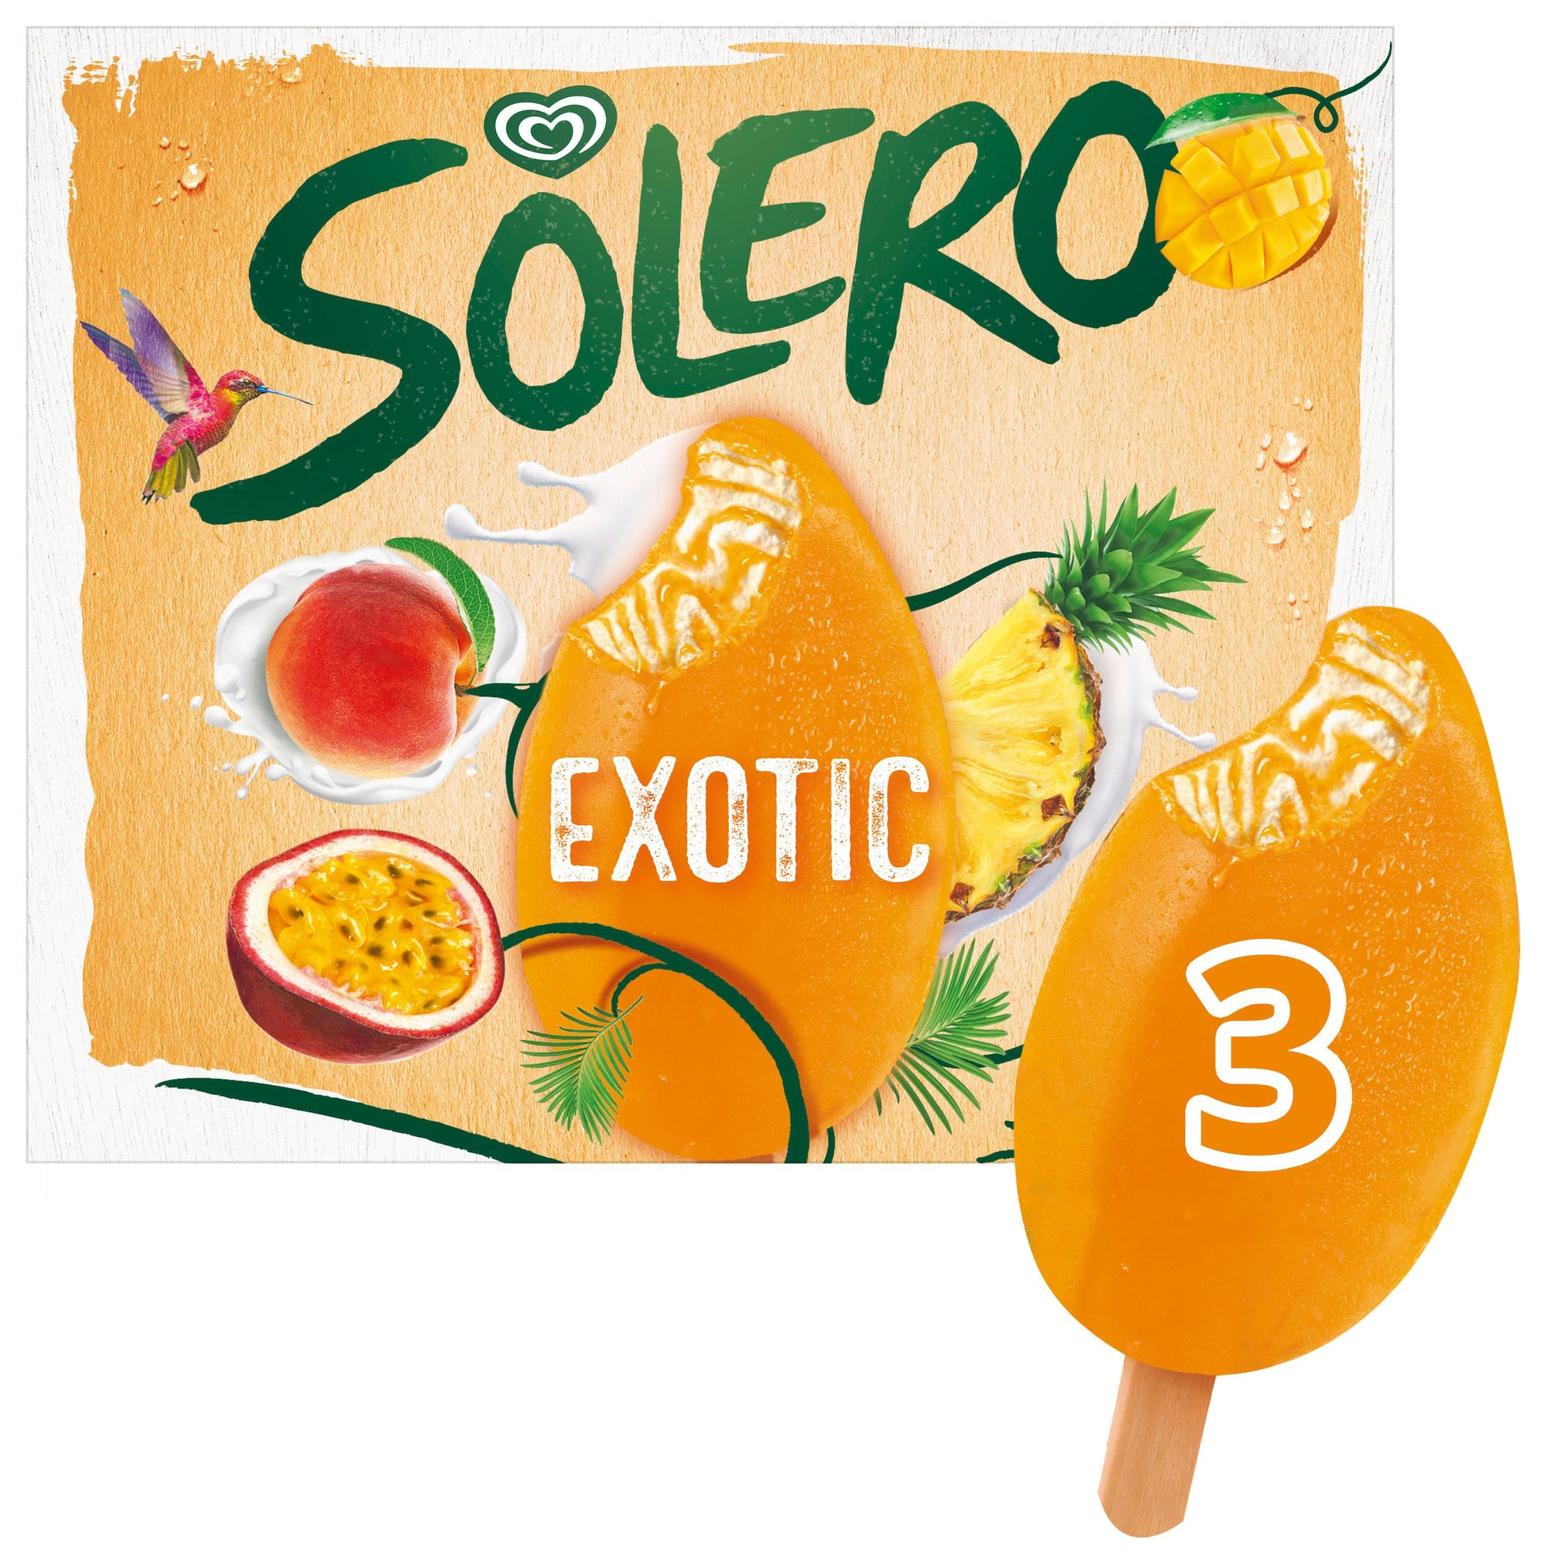 Solero  Ice Cream Exotic 3 x 90 ml offers at £2.75 in Iceland